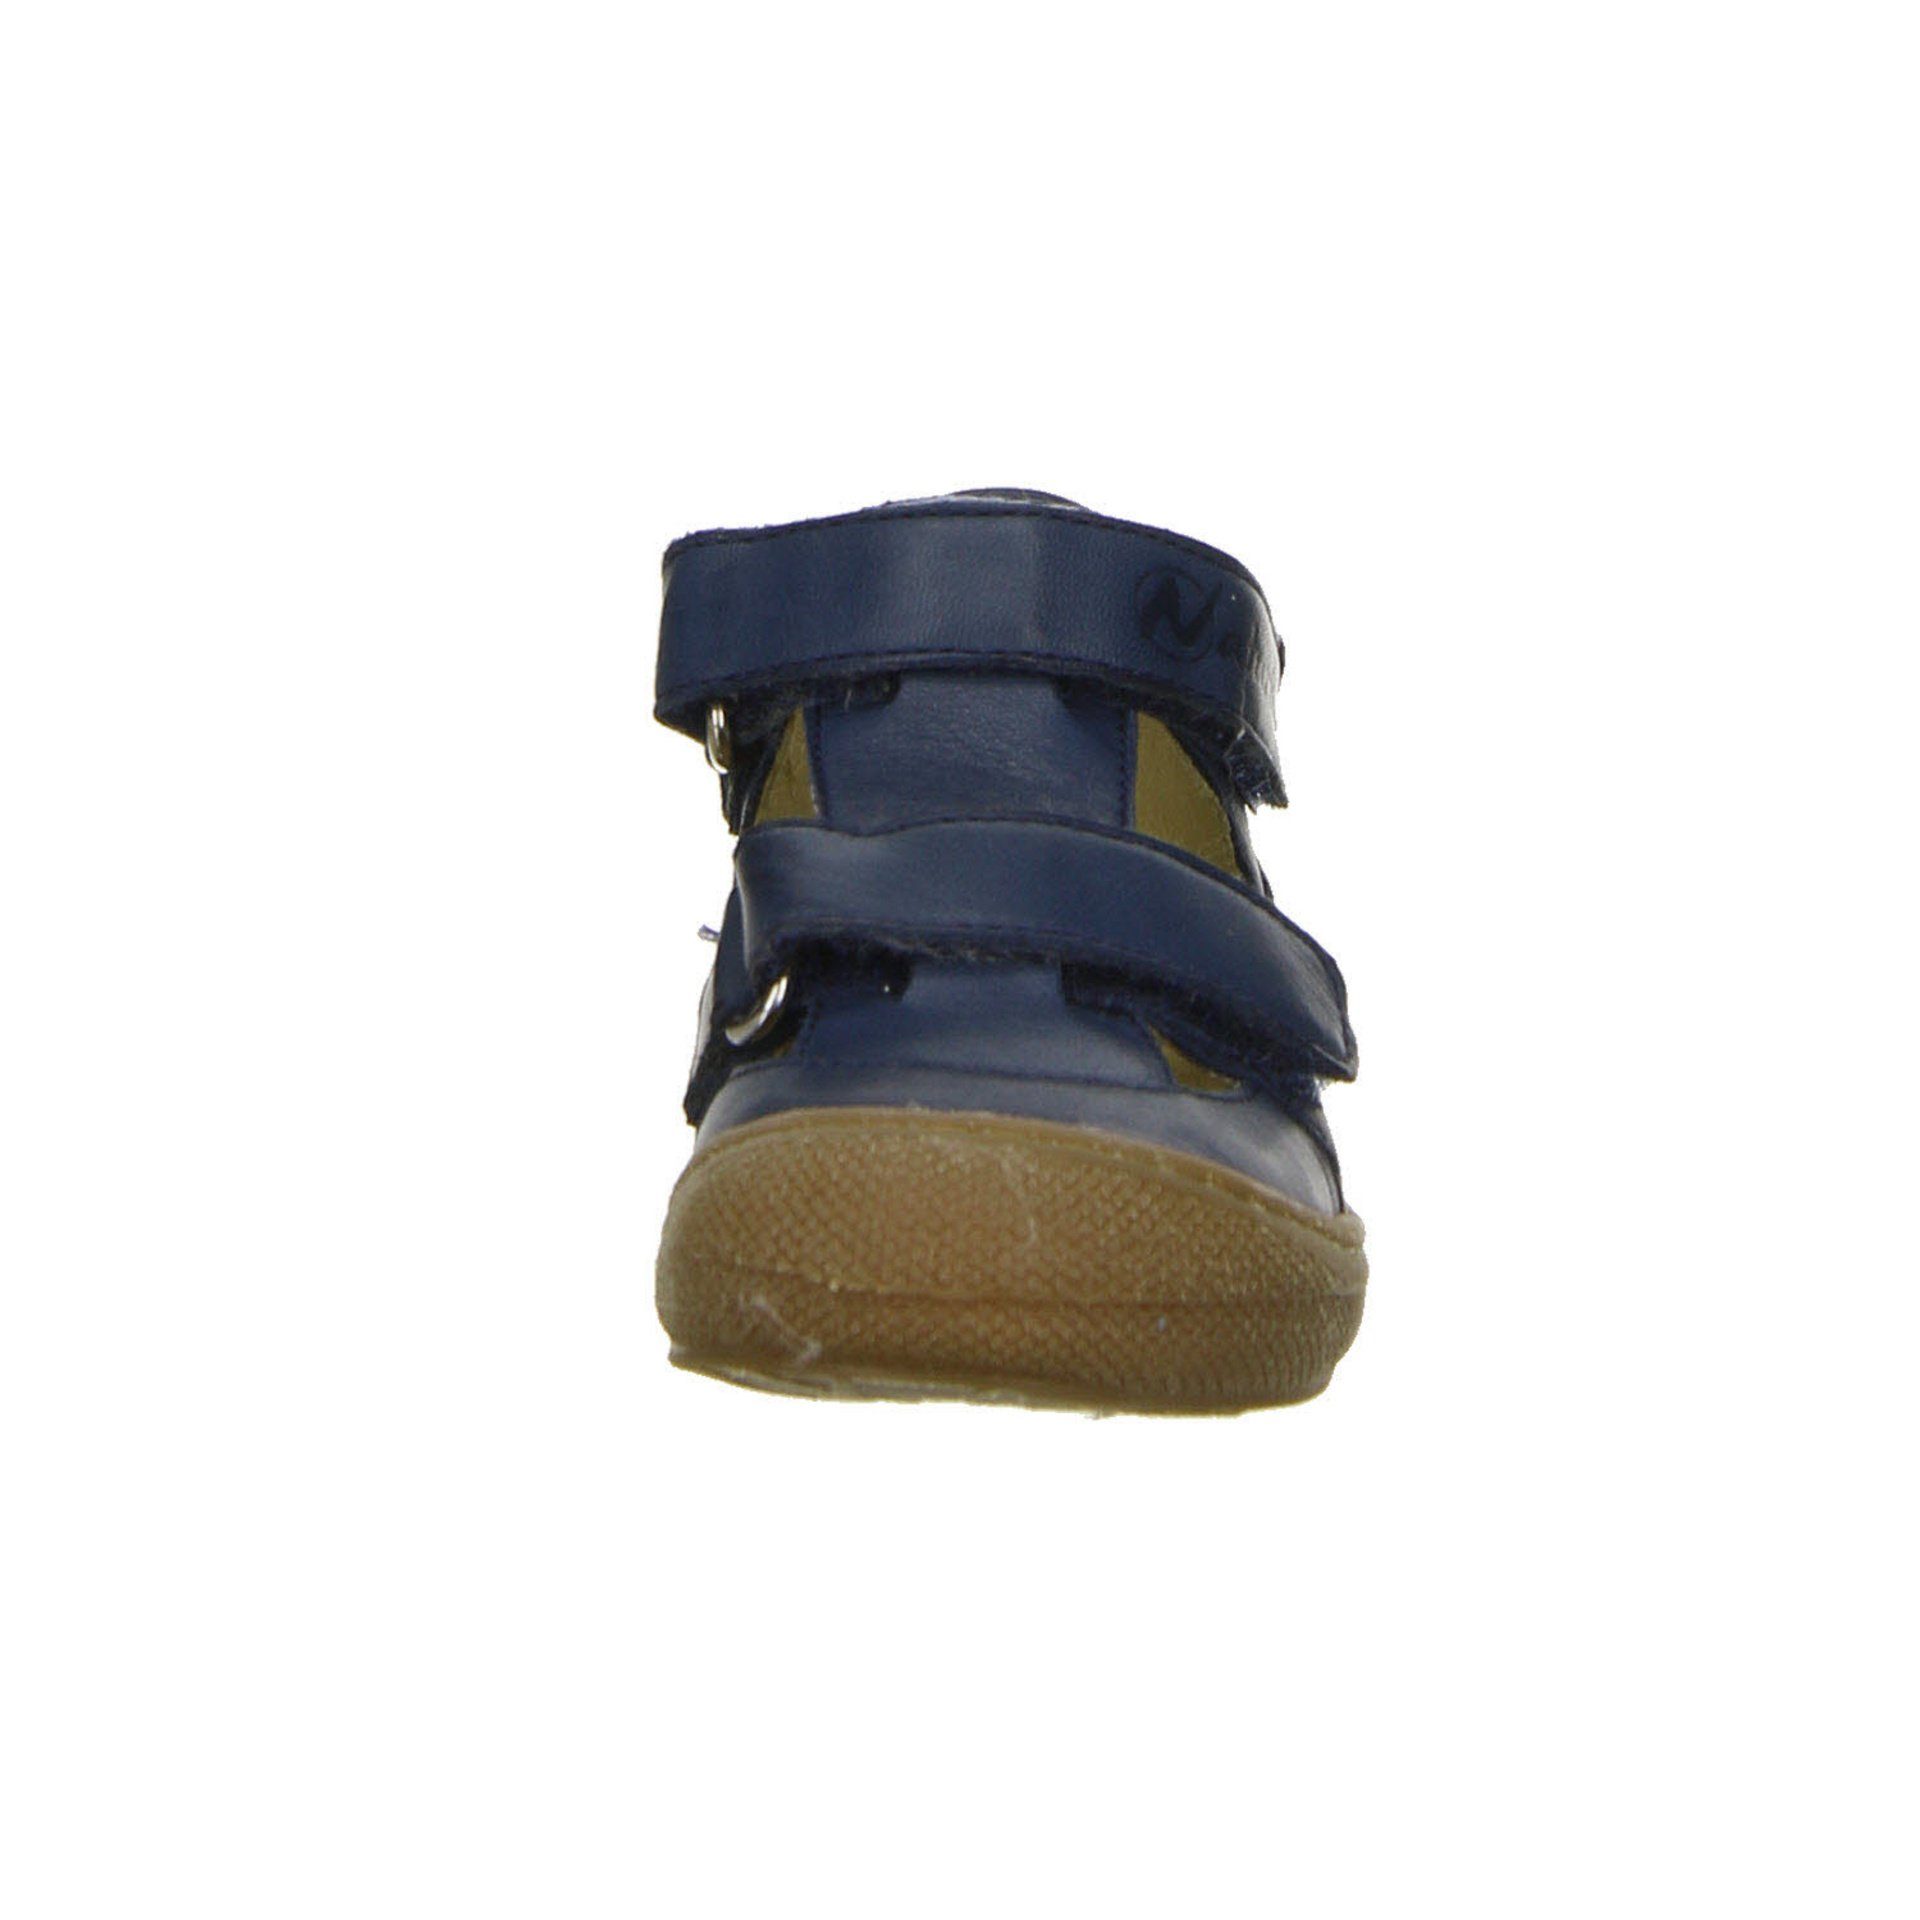 Naturino Minilette Glattleder Schuhe blau Puffy Jungen Lauflernschuh Sandalen dunkel